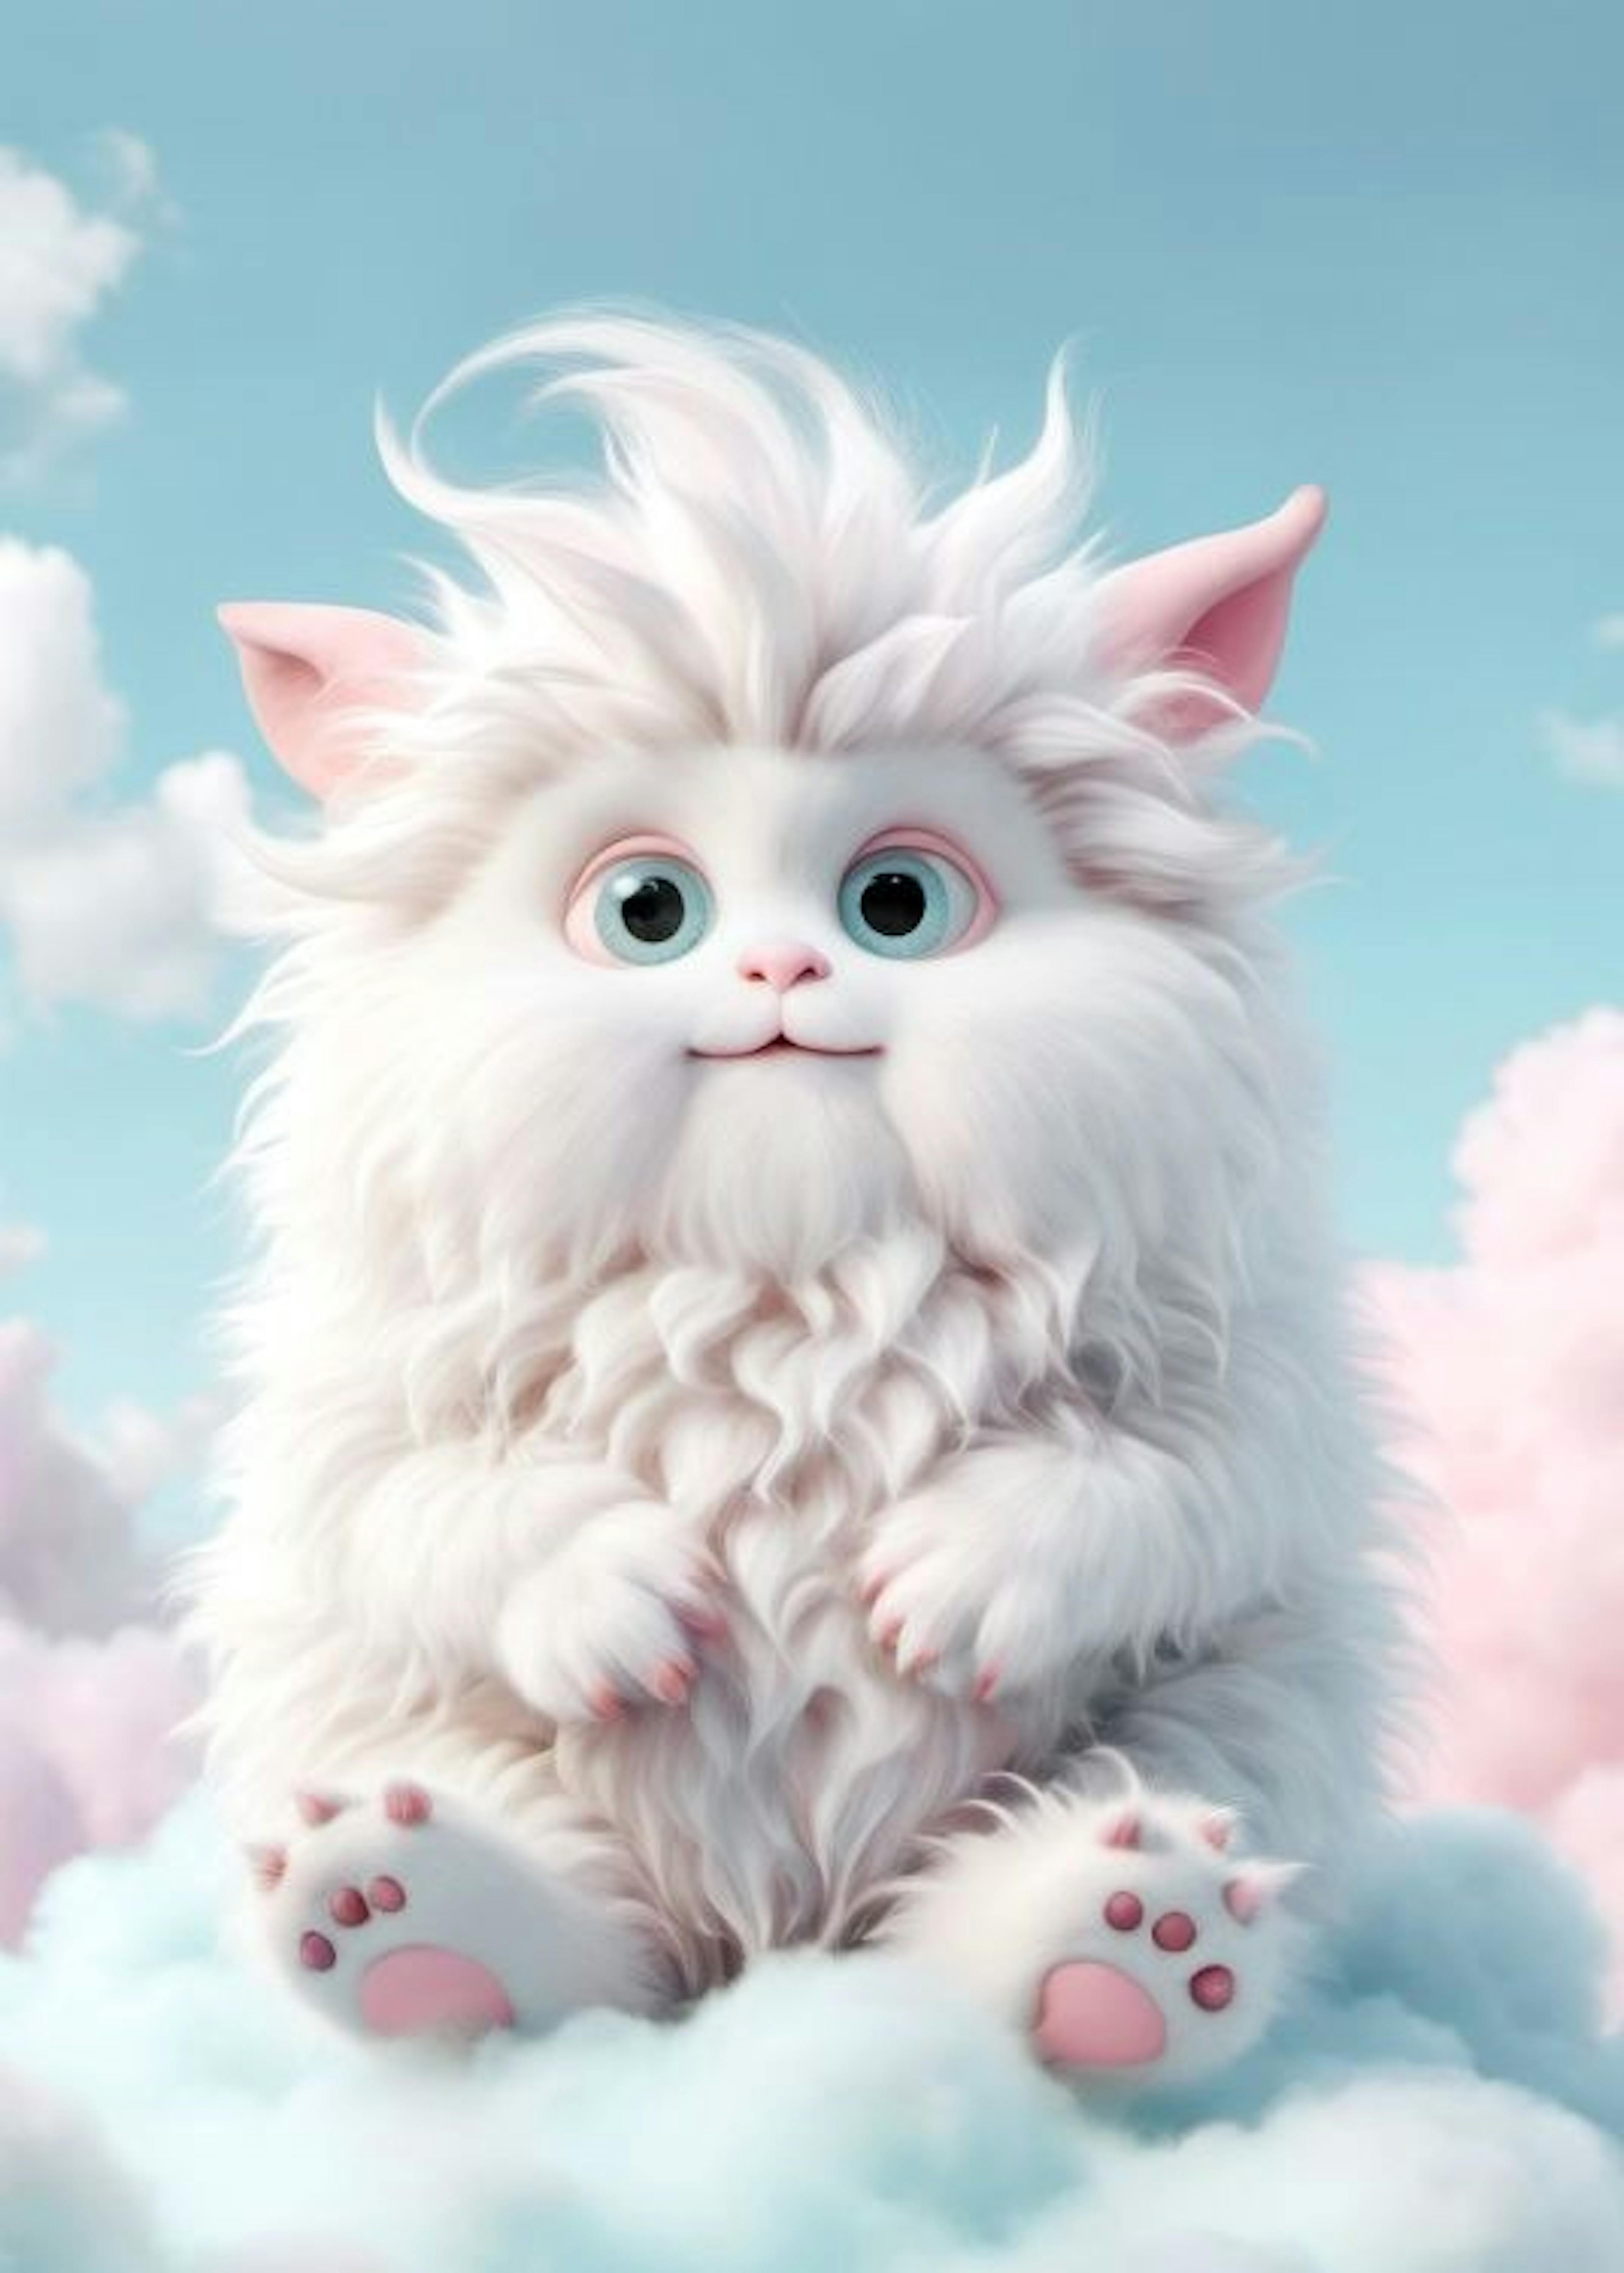 Fluffy Creature No2 Poster 0